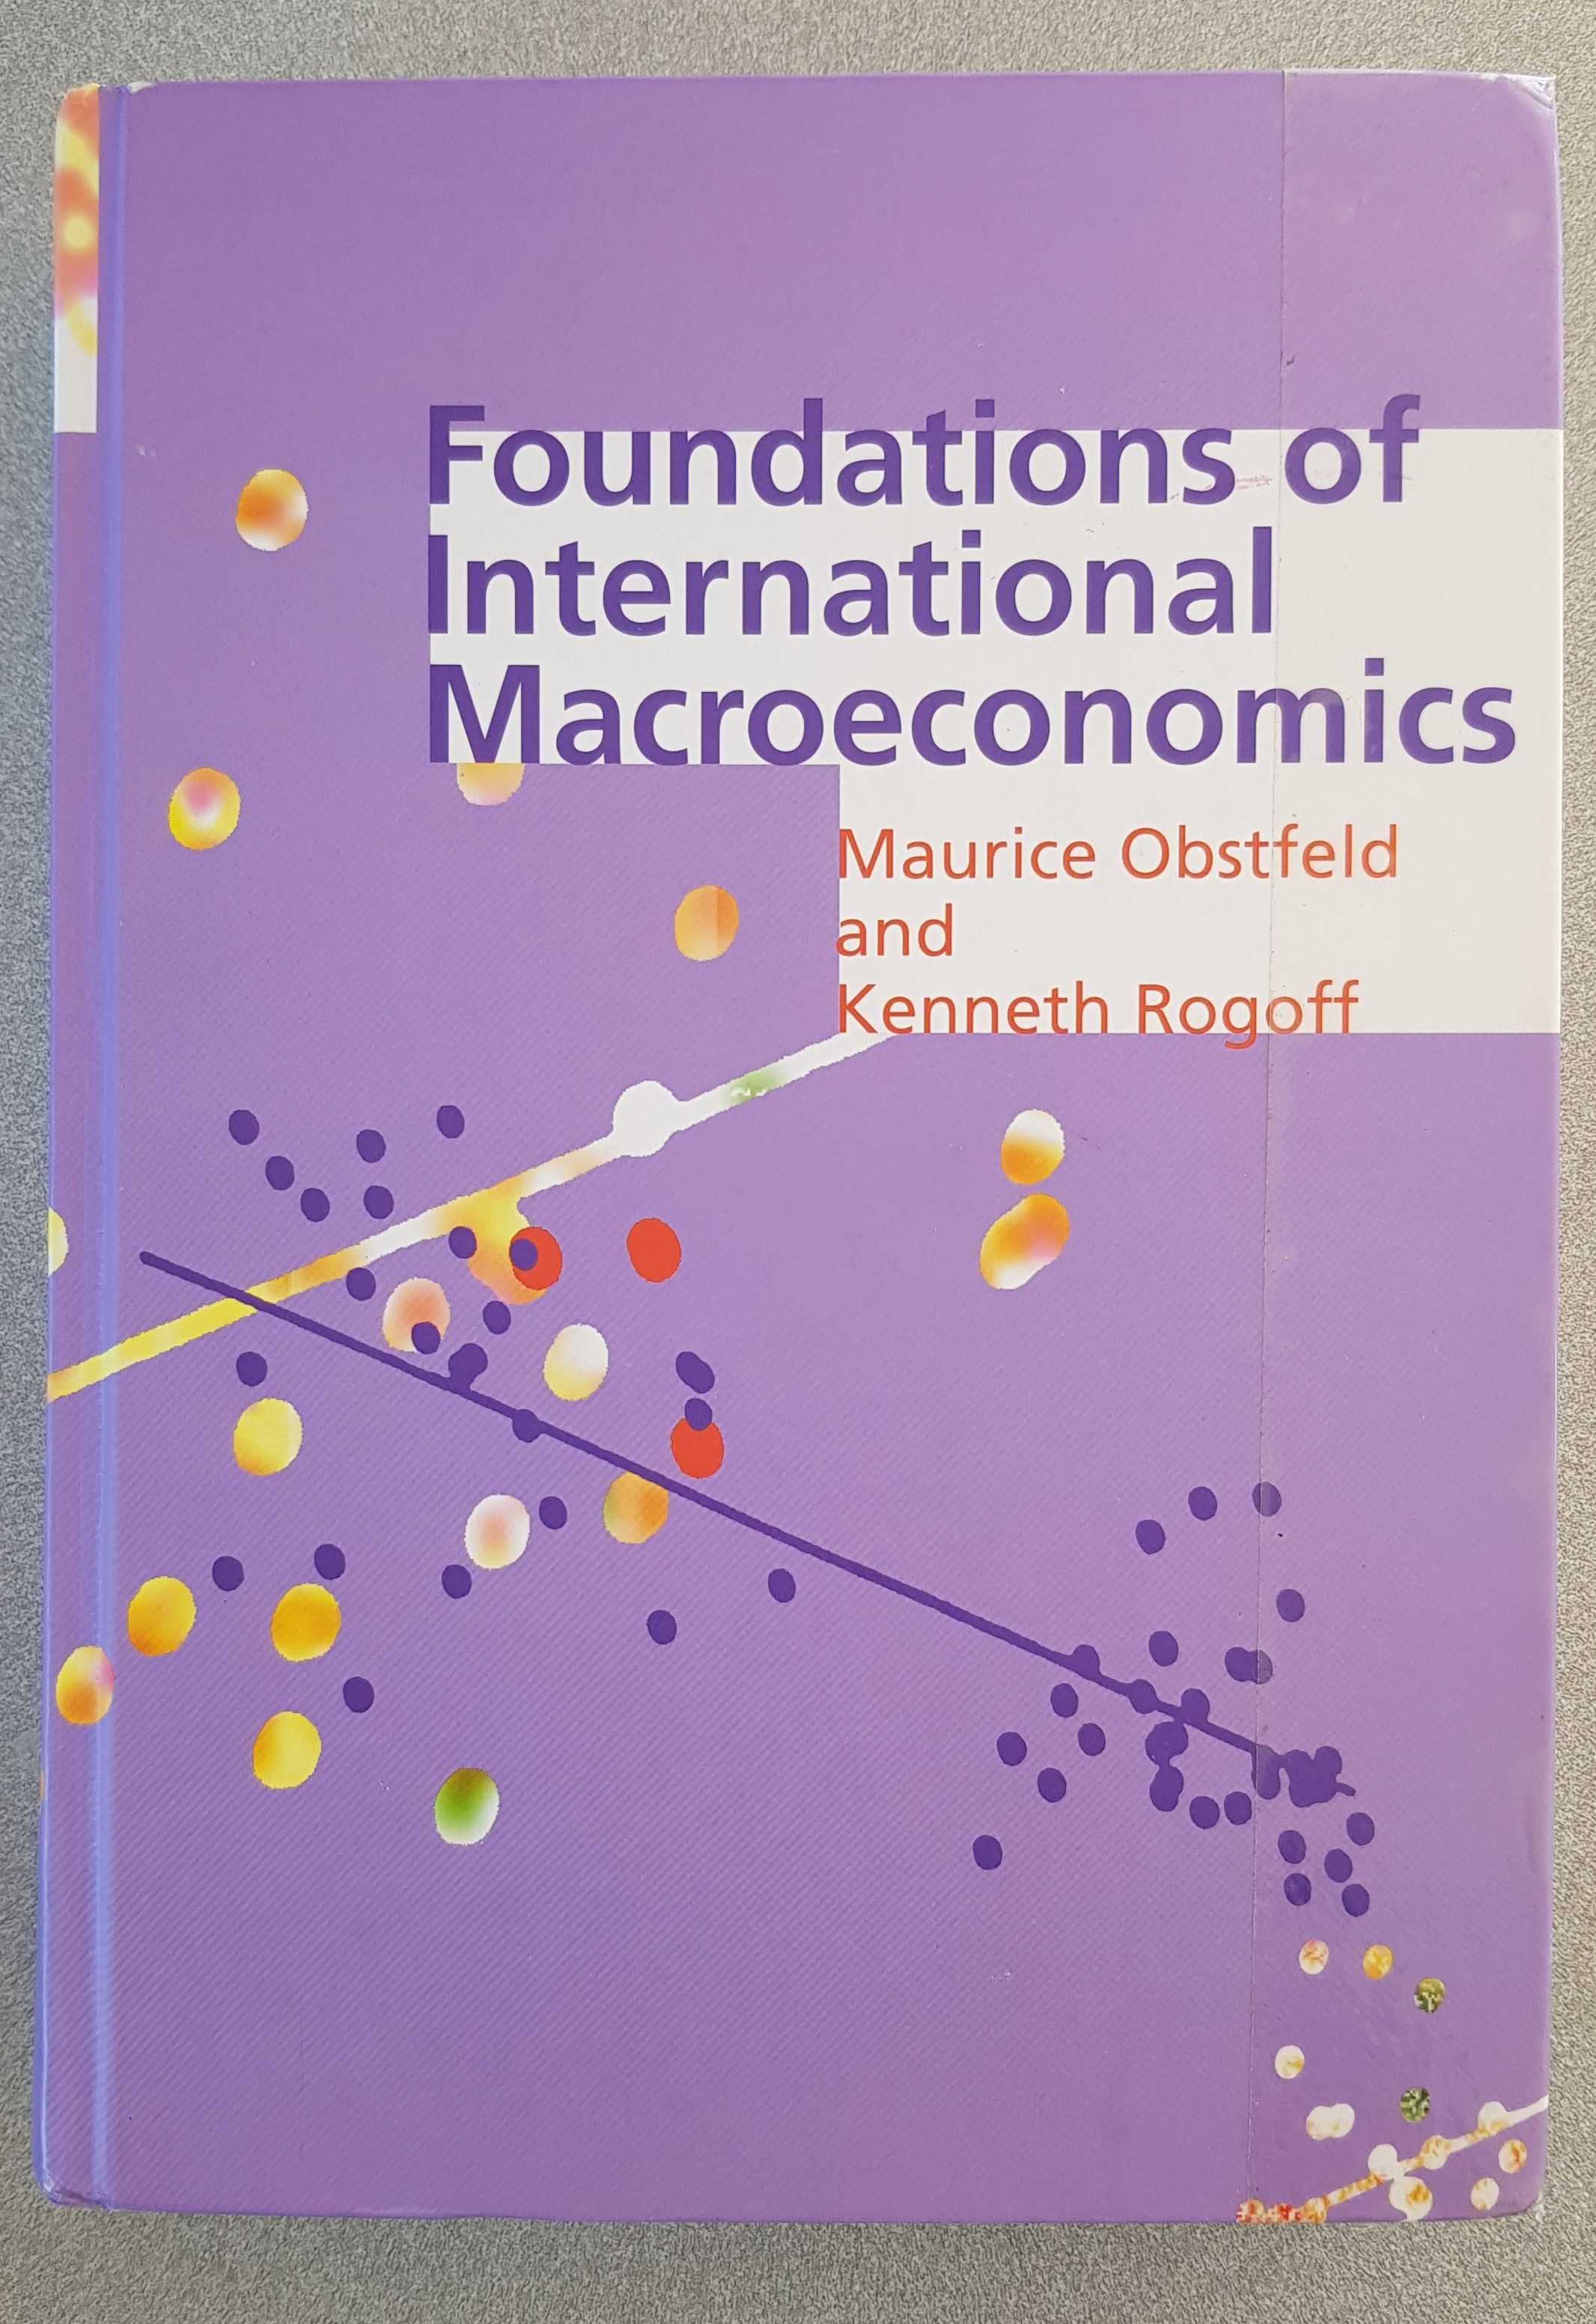 Foundations of International Macroeconomics, Maurice Obstfeld